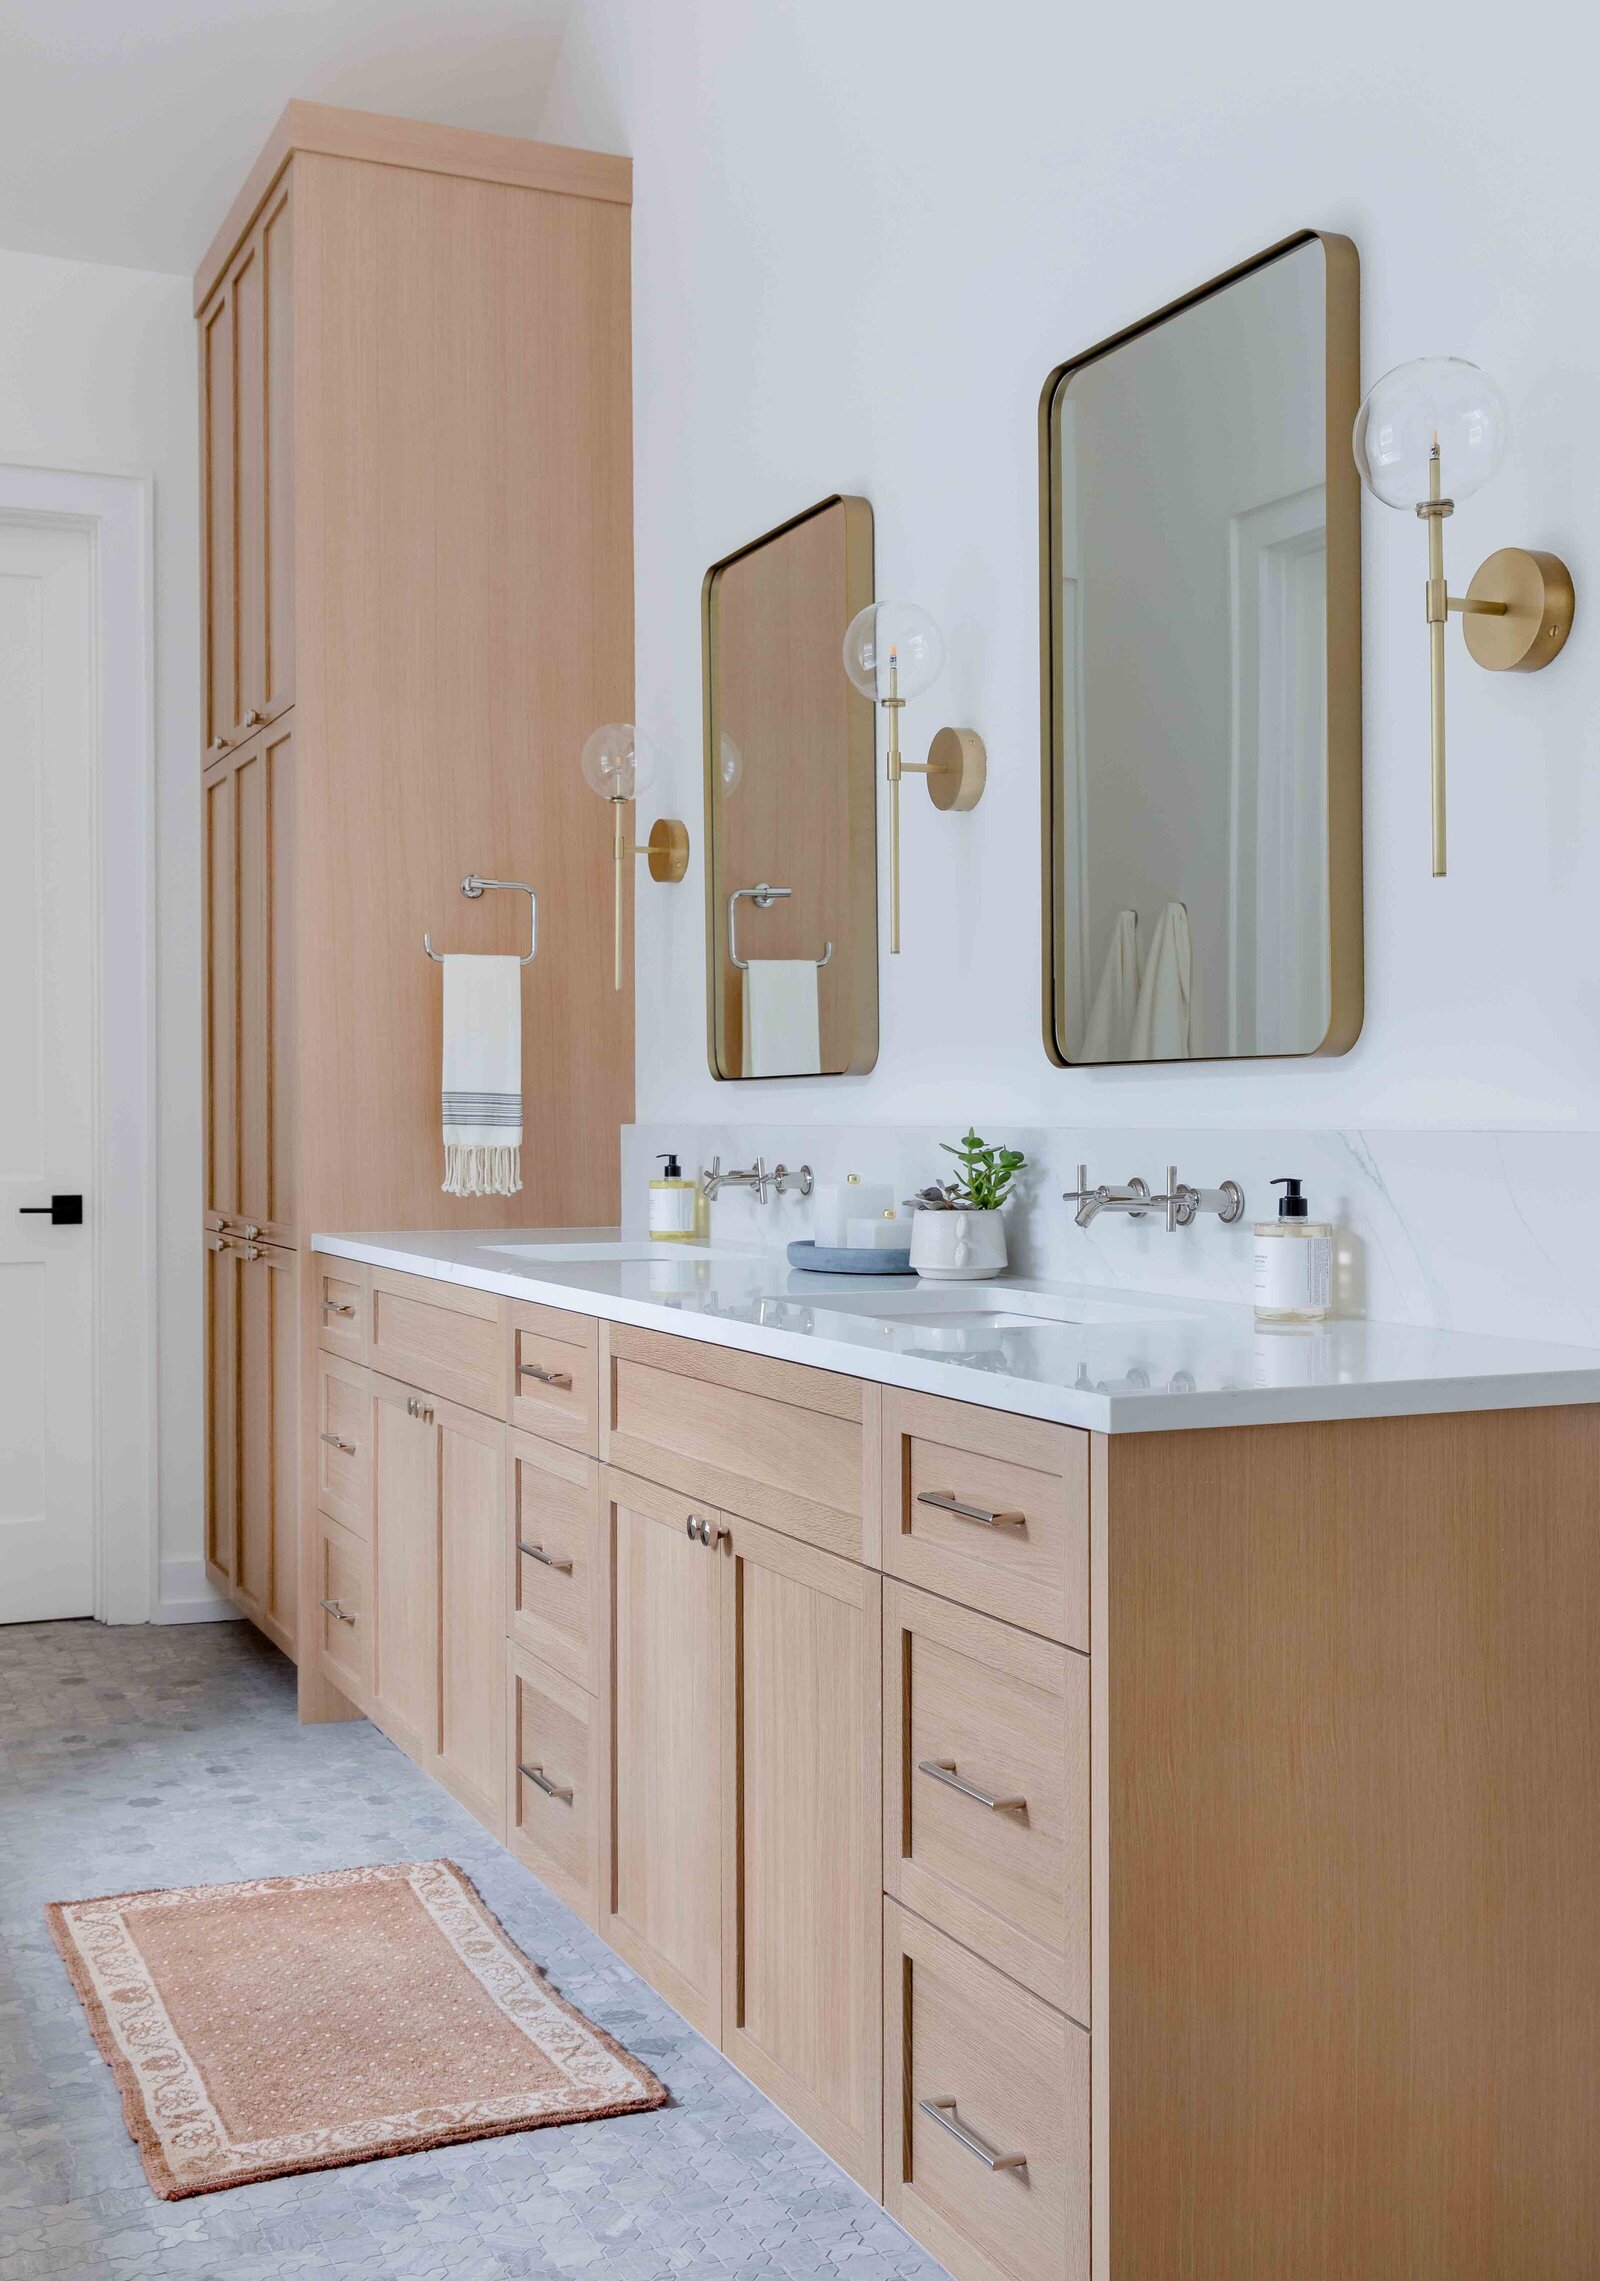 Nuela Designs White Oak Bathroom Vanity with Quartz Counter and Gray Marble Floors